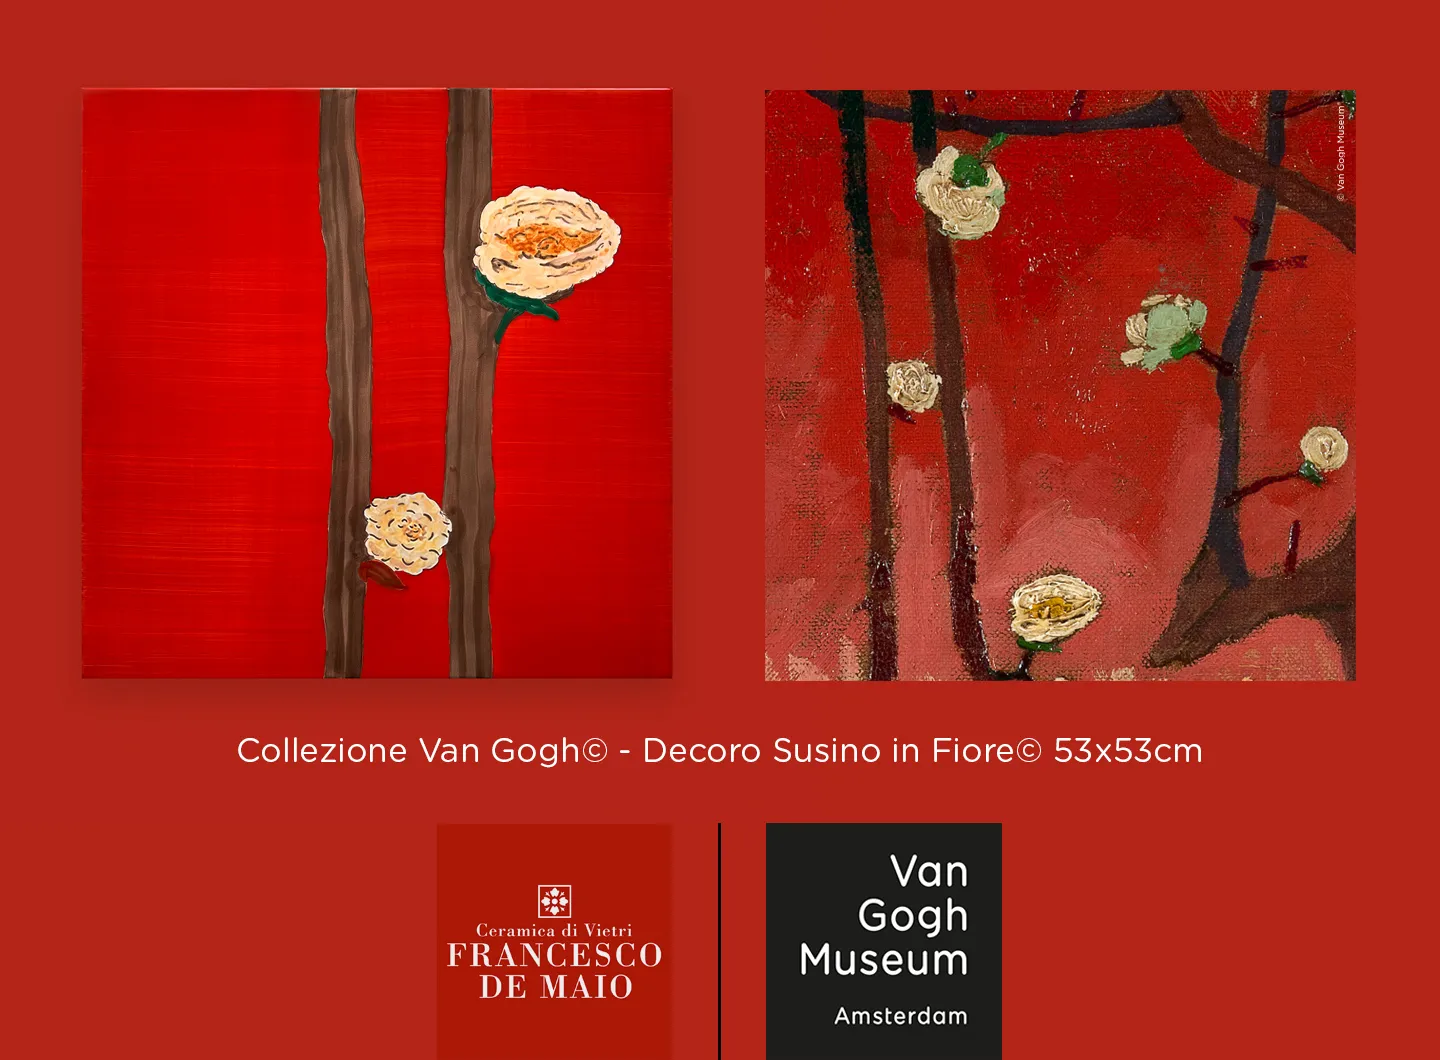 Collezione Van Gogh© di Ceramica Francesco De Maio x Van Gogh Museum® - Decoro Susino in Fiore© 53x53cm